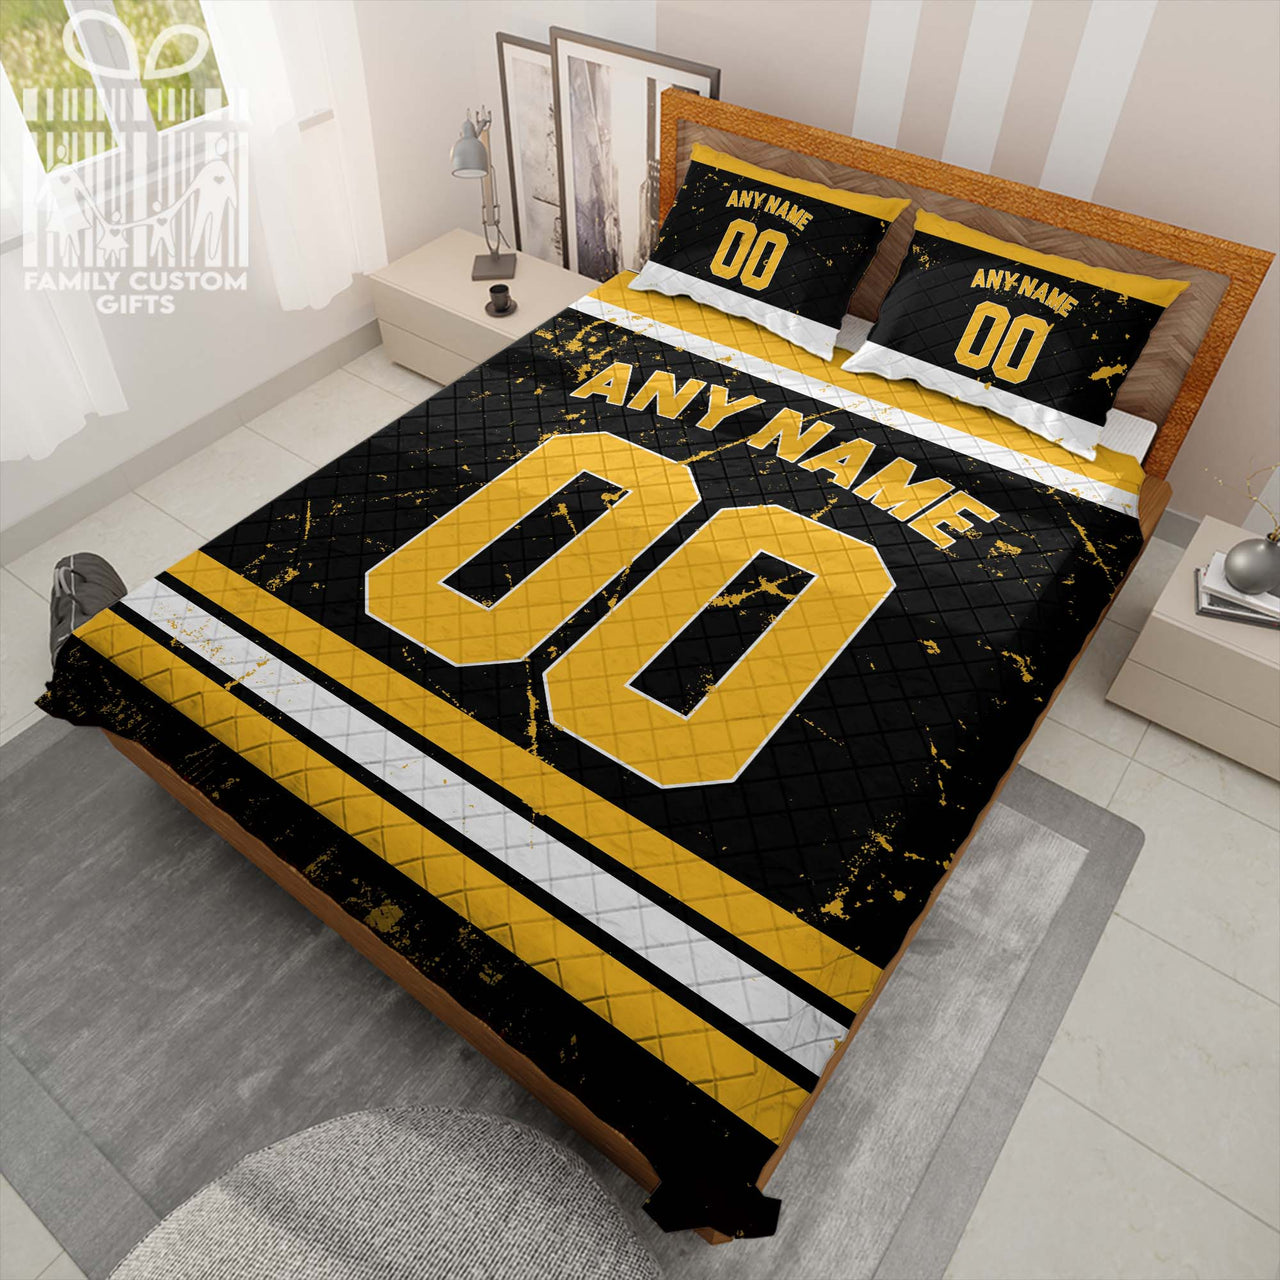 Custom Quilt Sets Boston Jersey Personalized Ice hockey Premium Quilt Bedding for Men Women